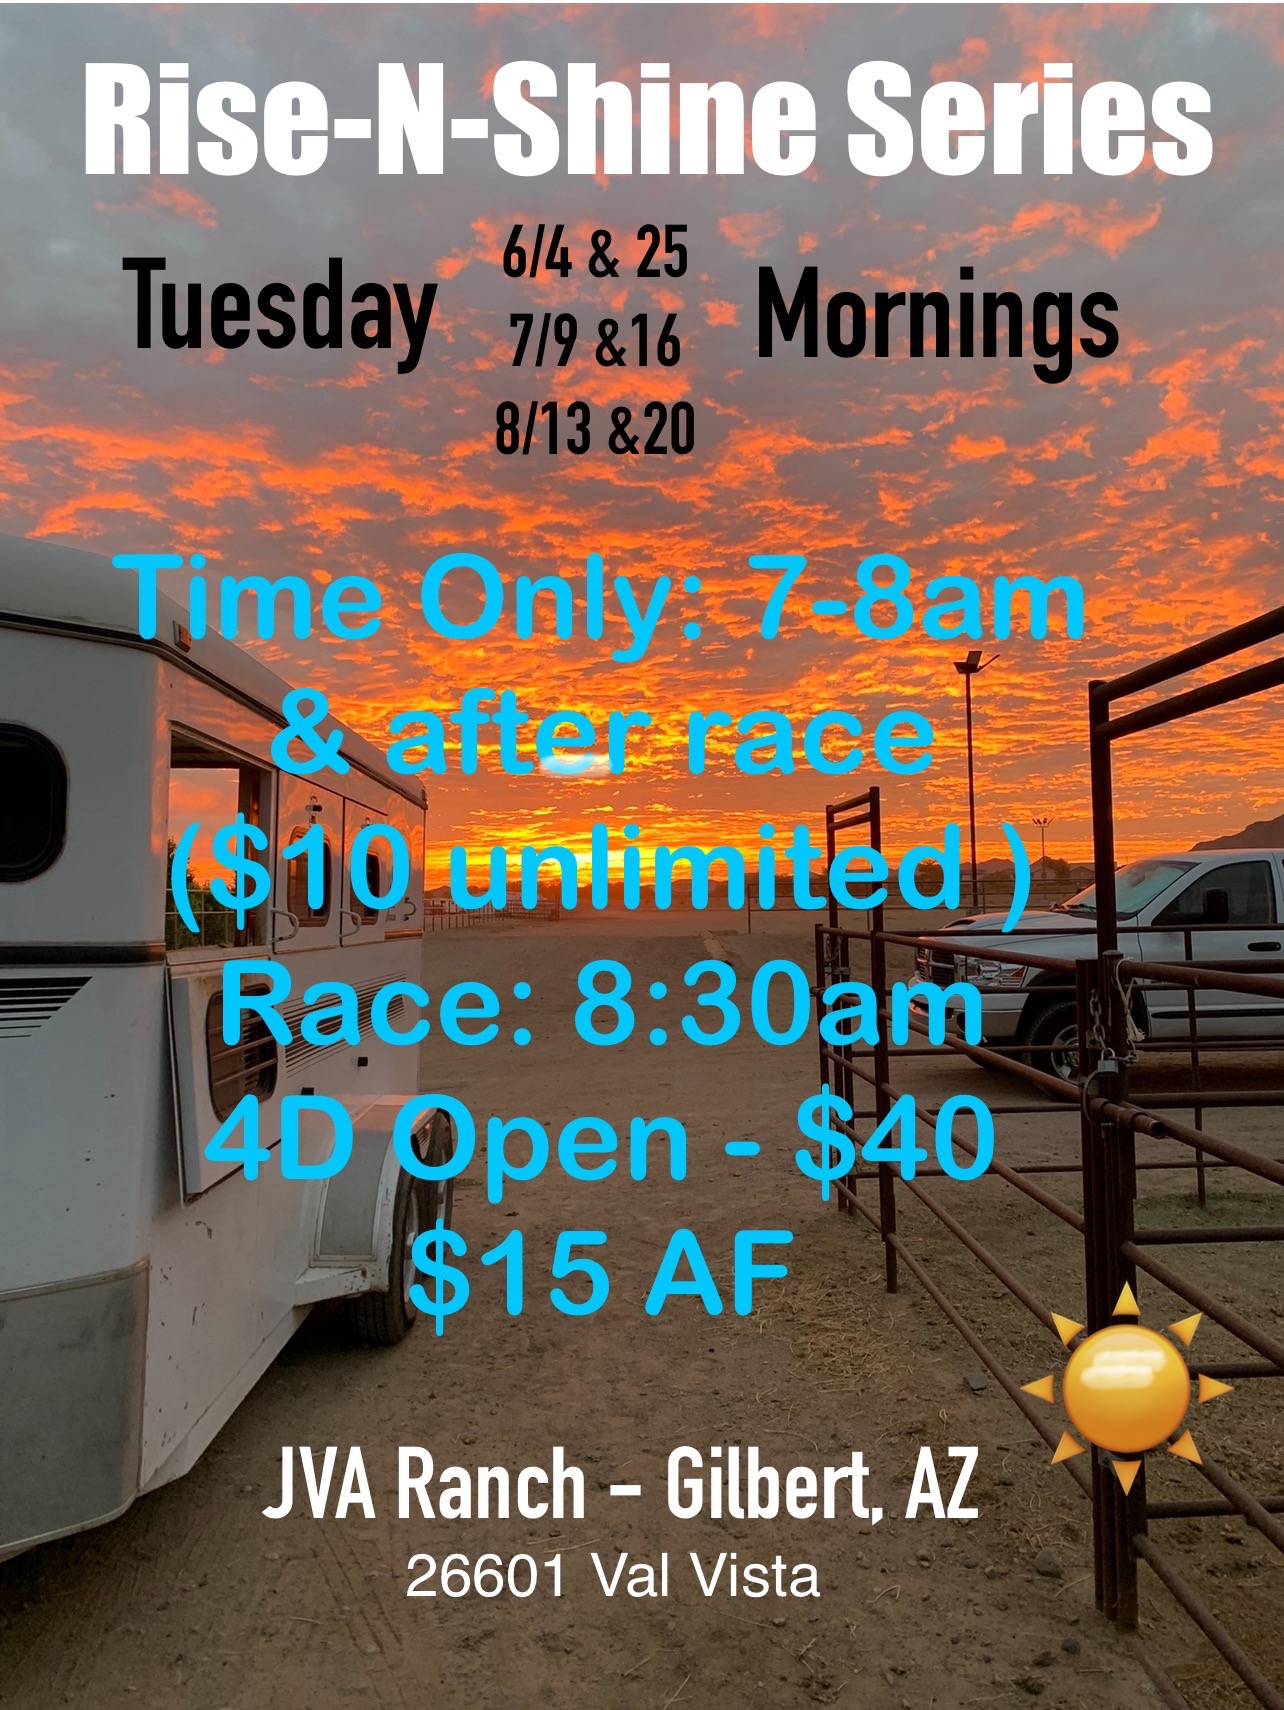 Tuesday Jackpots JVA Ranch QCBRA